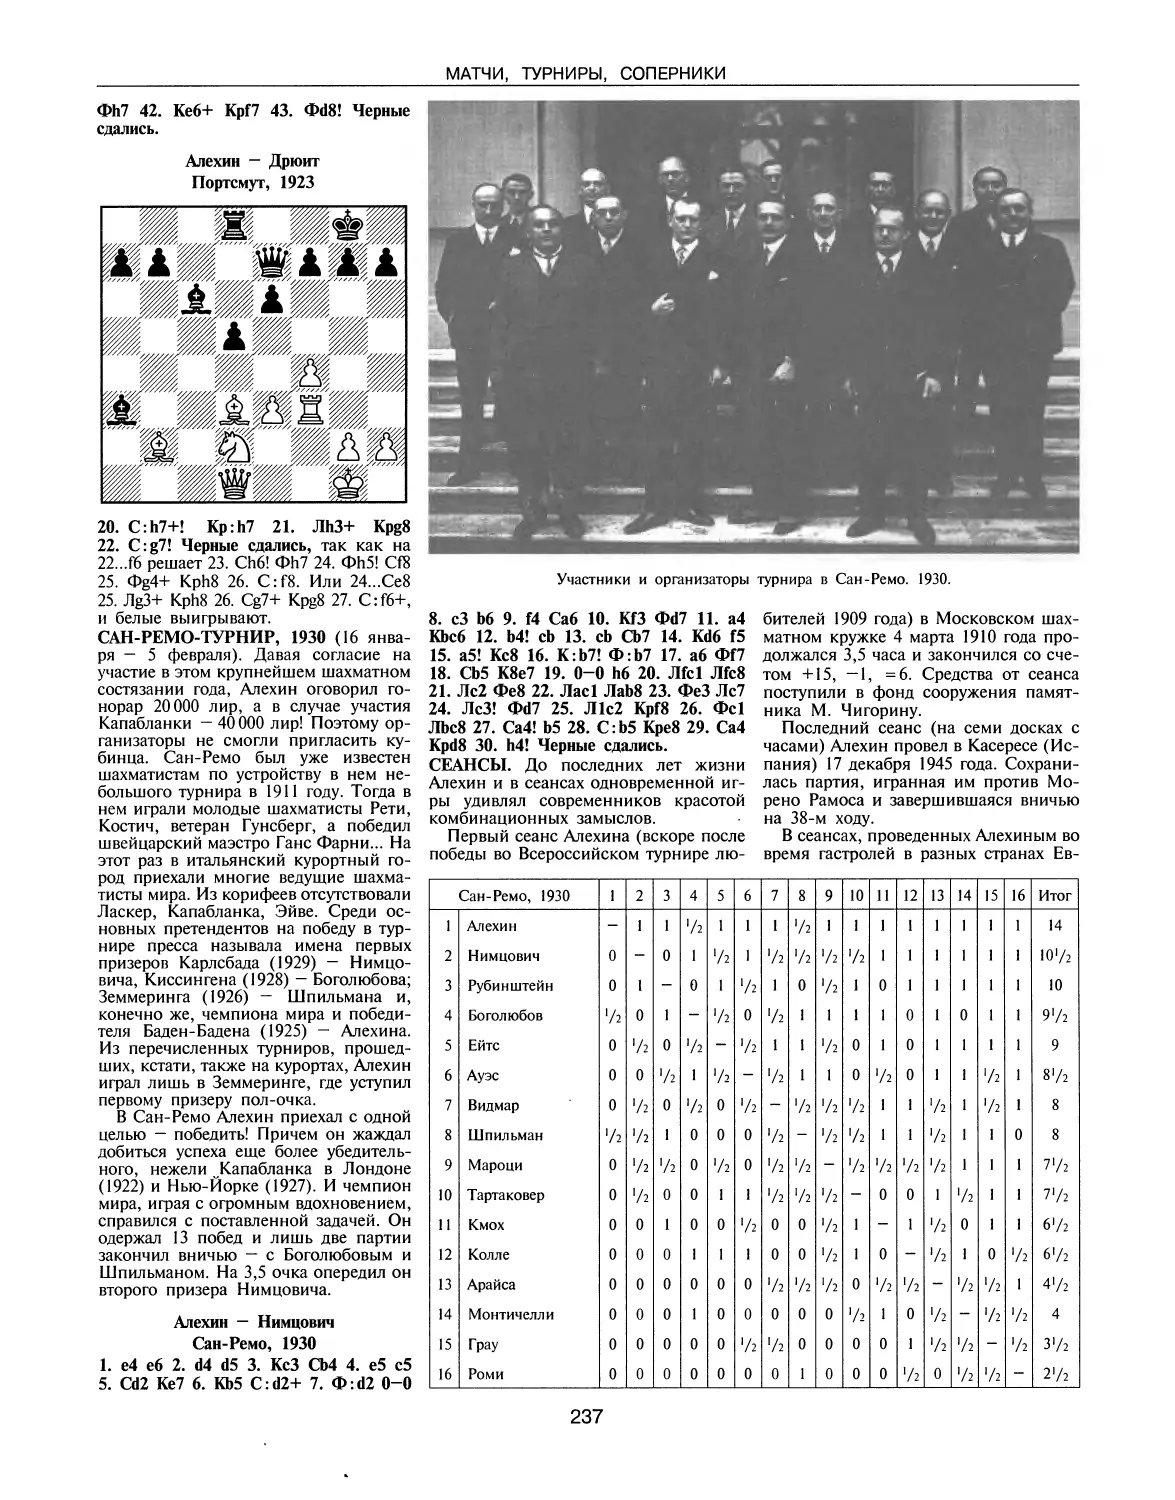 Сан-Ремо-турнир, 1930
Сеансы